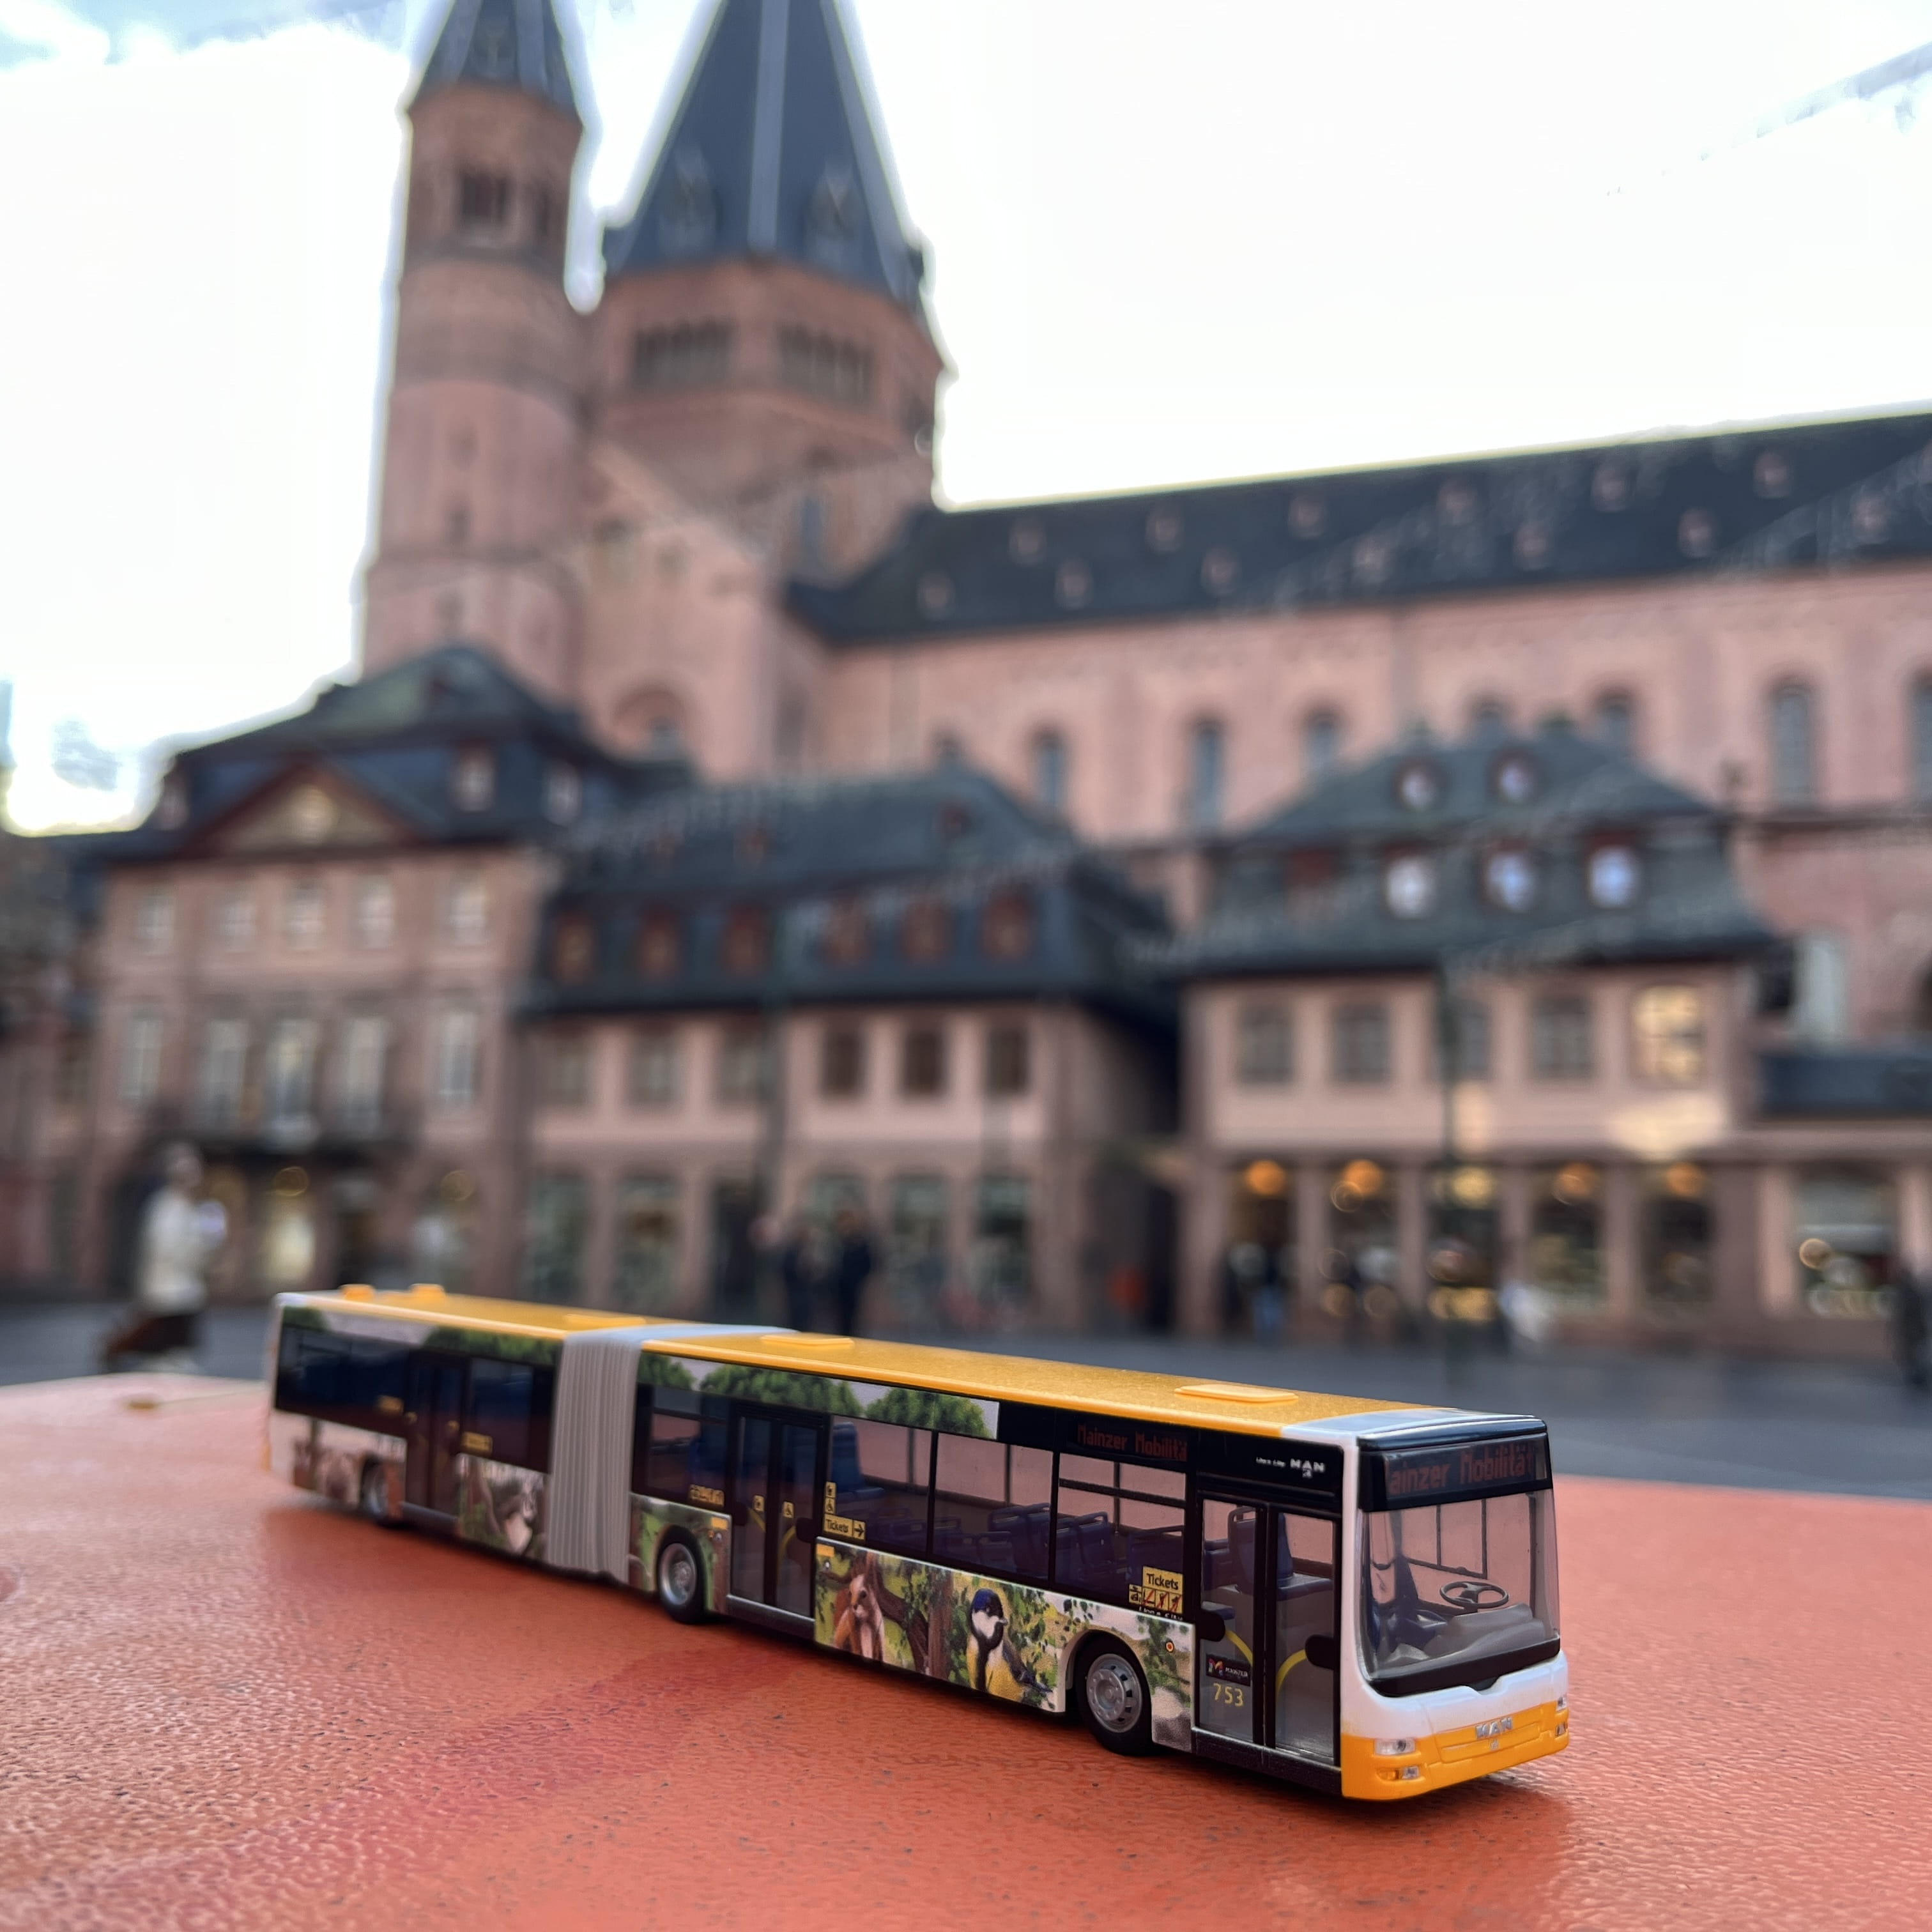 Produktfoto des Graffitibusses als Modell